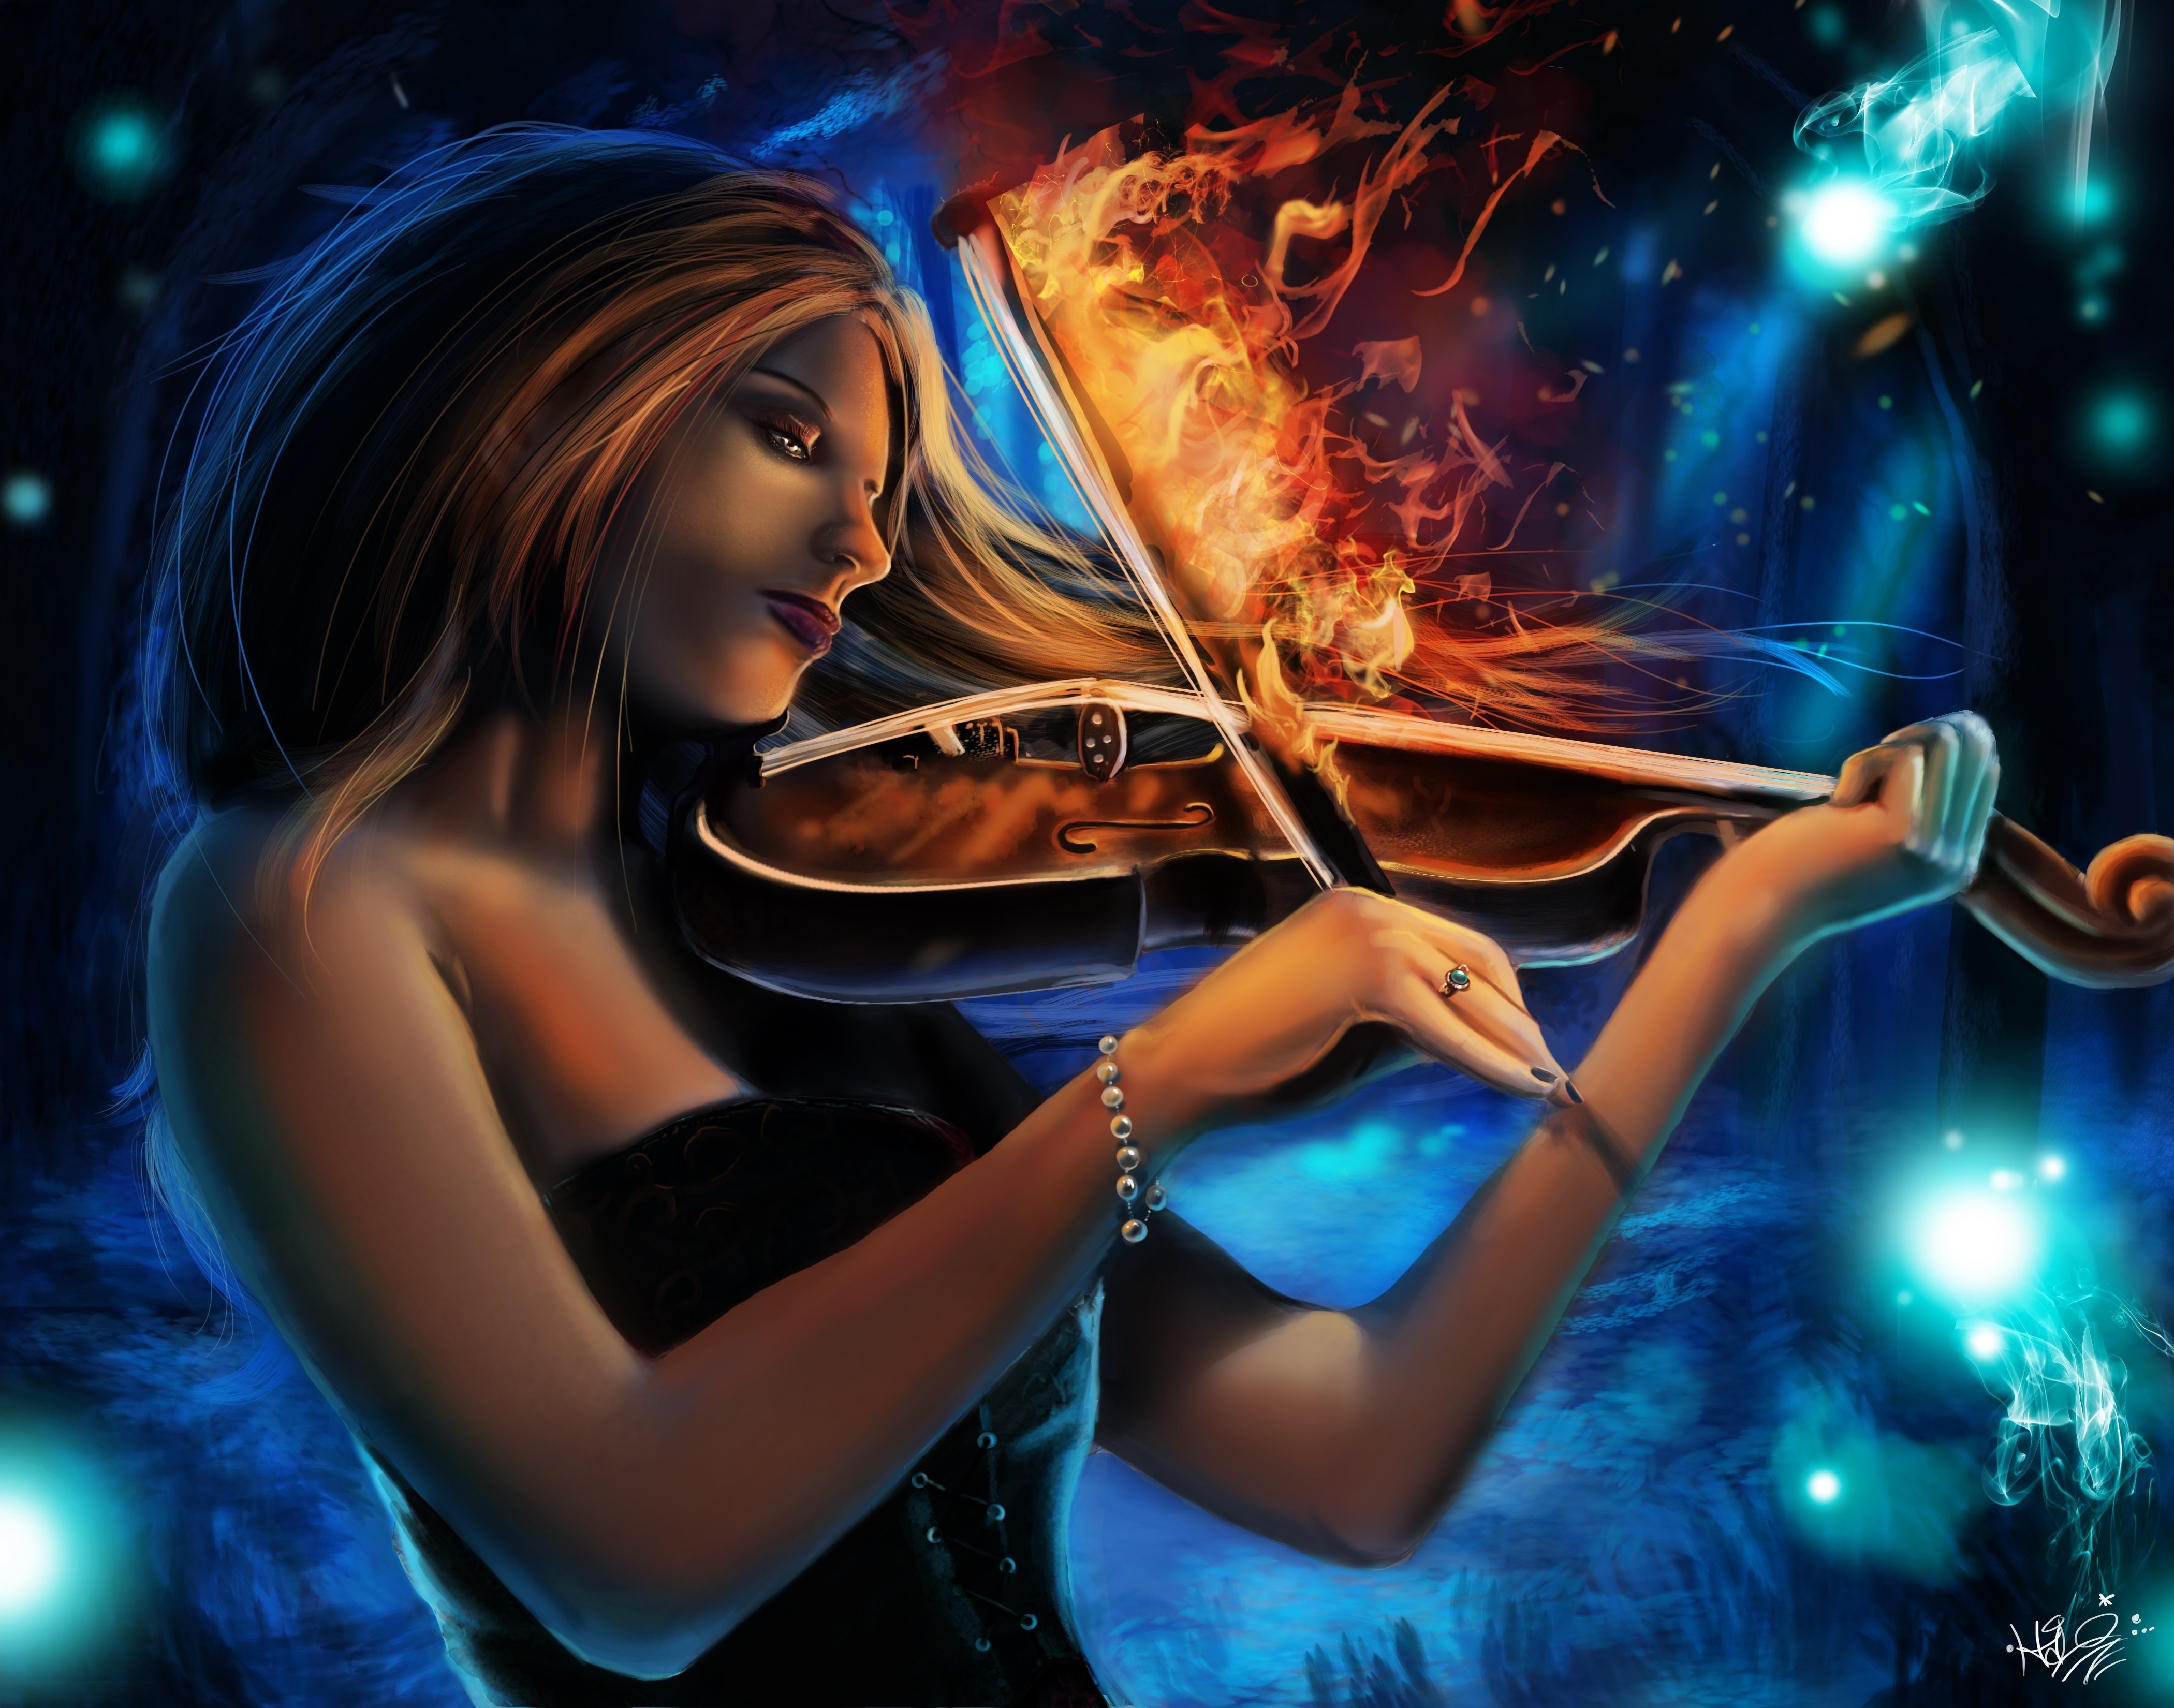 magic, Violin, Fire, Burning, Lullaby, Fantasy, Girls, Fantasy, Music Wallpaper